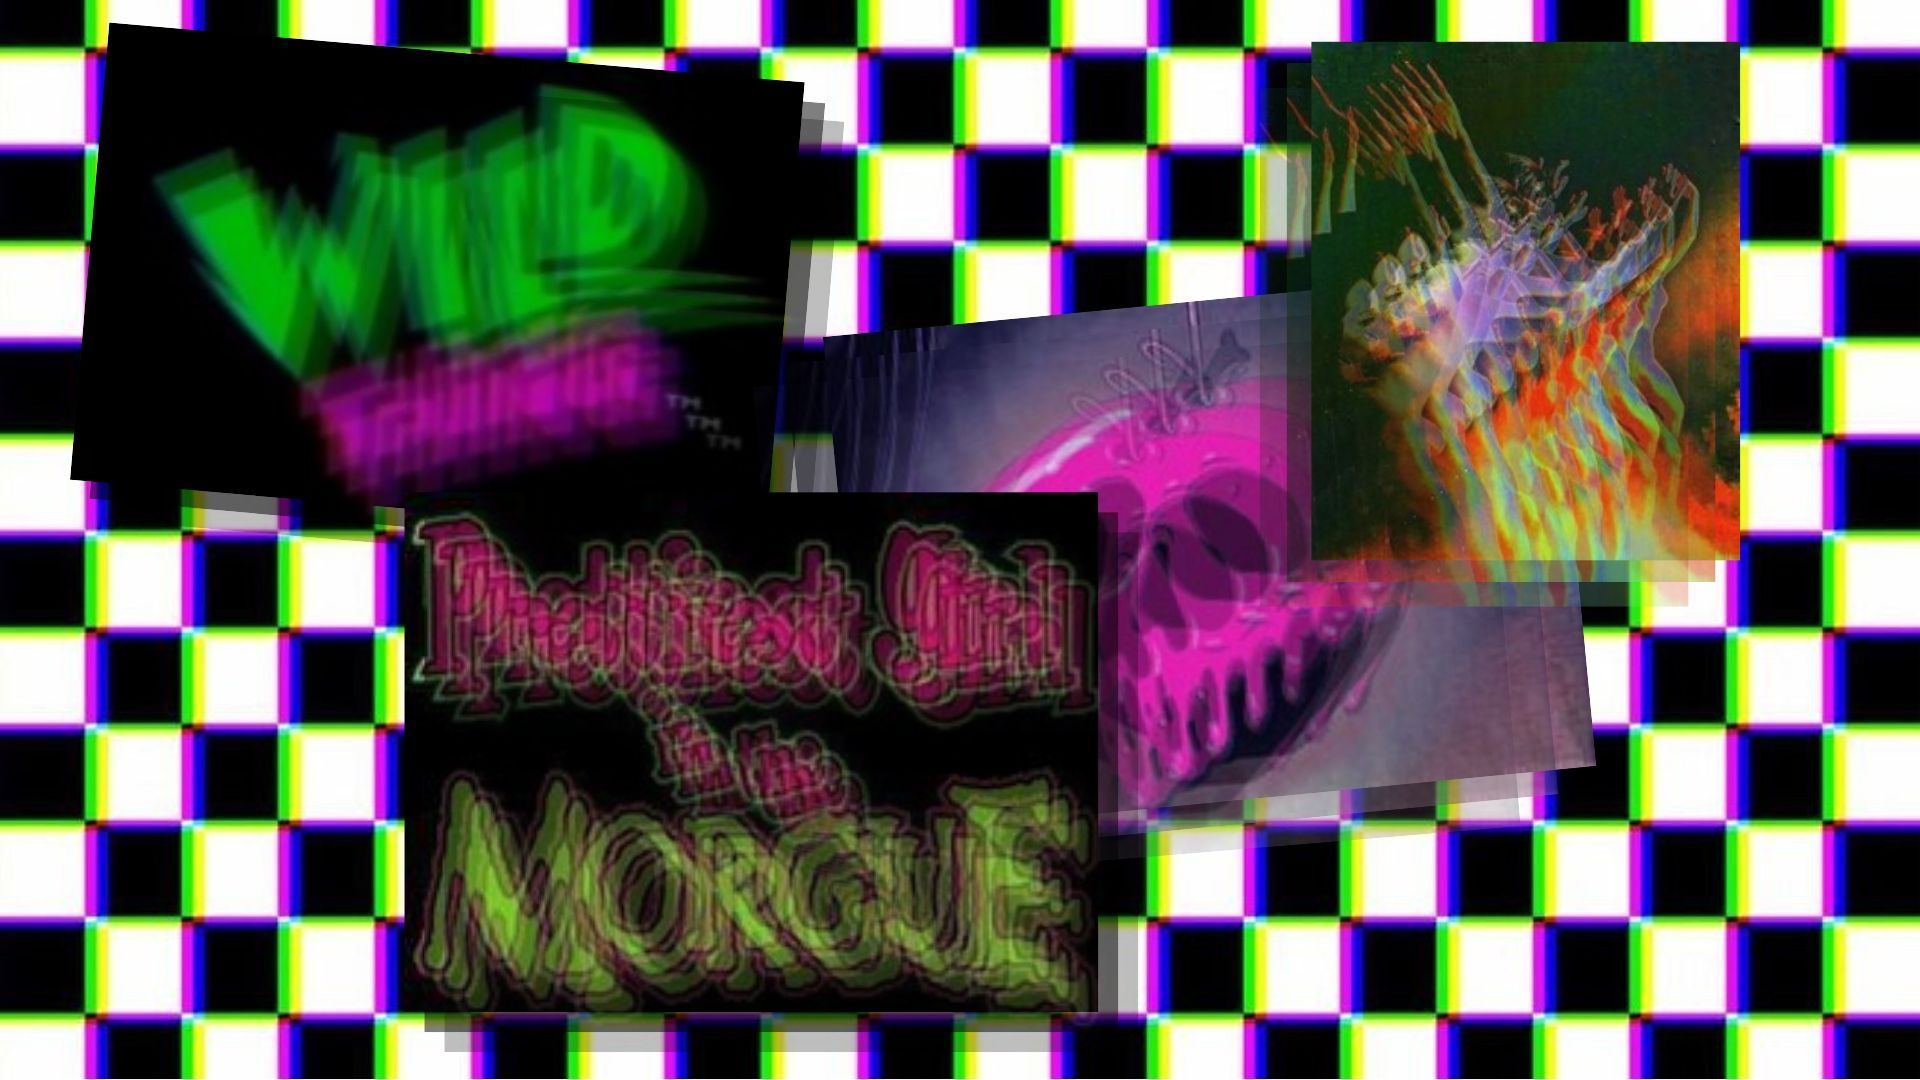 Grunge Aesthetic Computer Wallpaper. Computer wallpaper, Aesthetic grunge, Grunge aesthetic